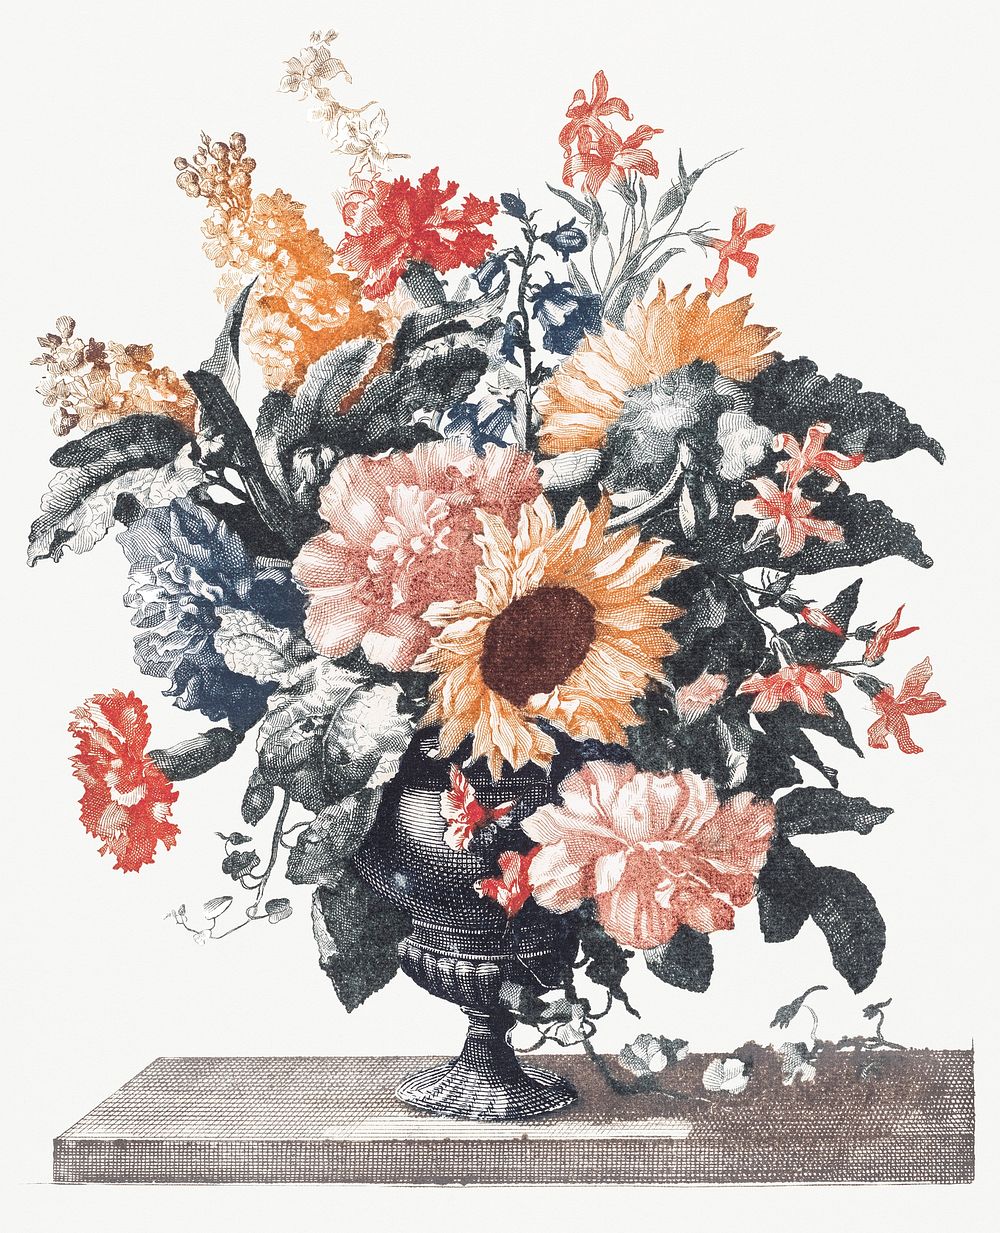 Stone Vase With Sunflowers and Carnations (1688-1698) by Johan Teyler (1648-1709). Original from Rijks Museum. Digitally…